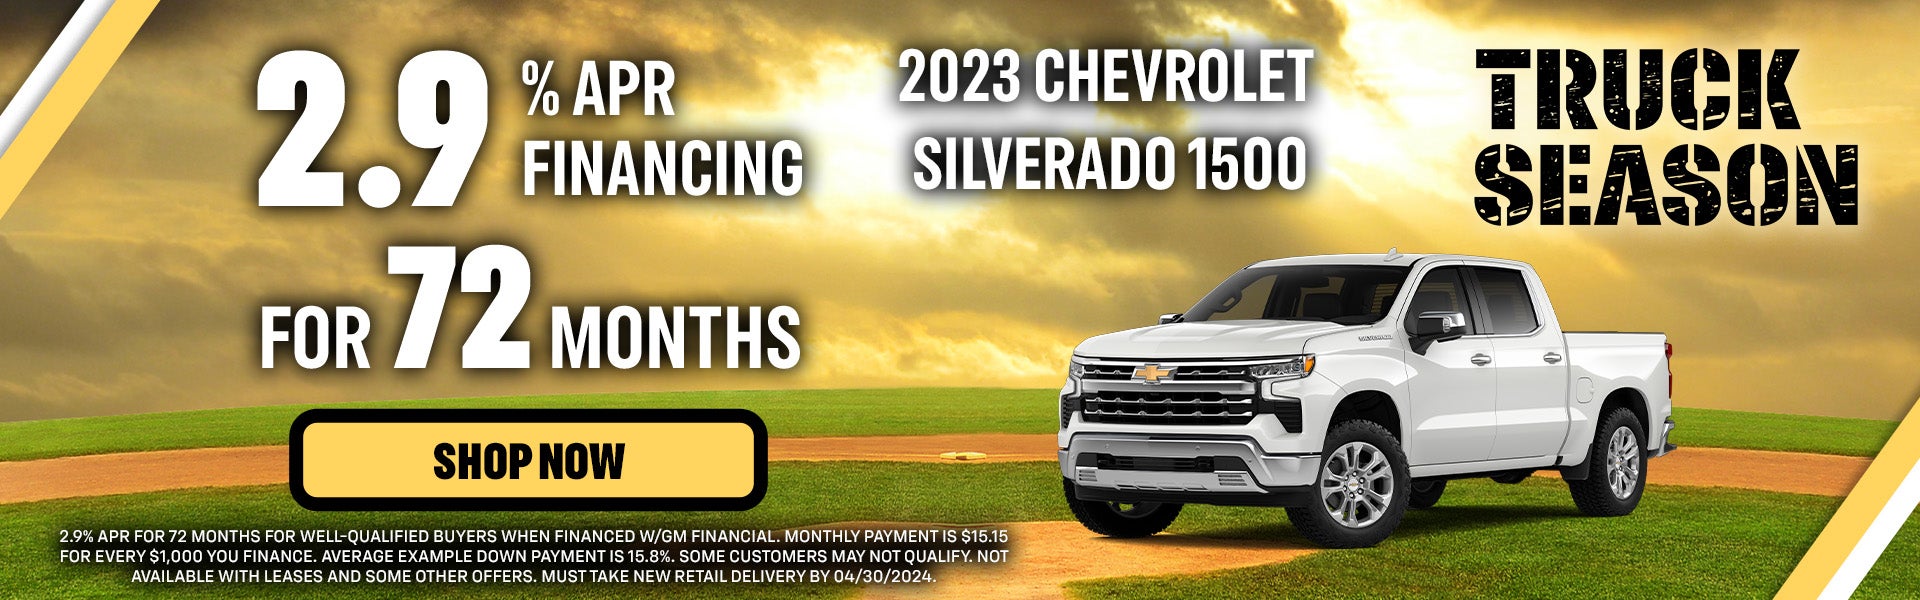 2.9% APR for 72 months on 2023 Chevrolet Silverado 1500